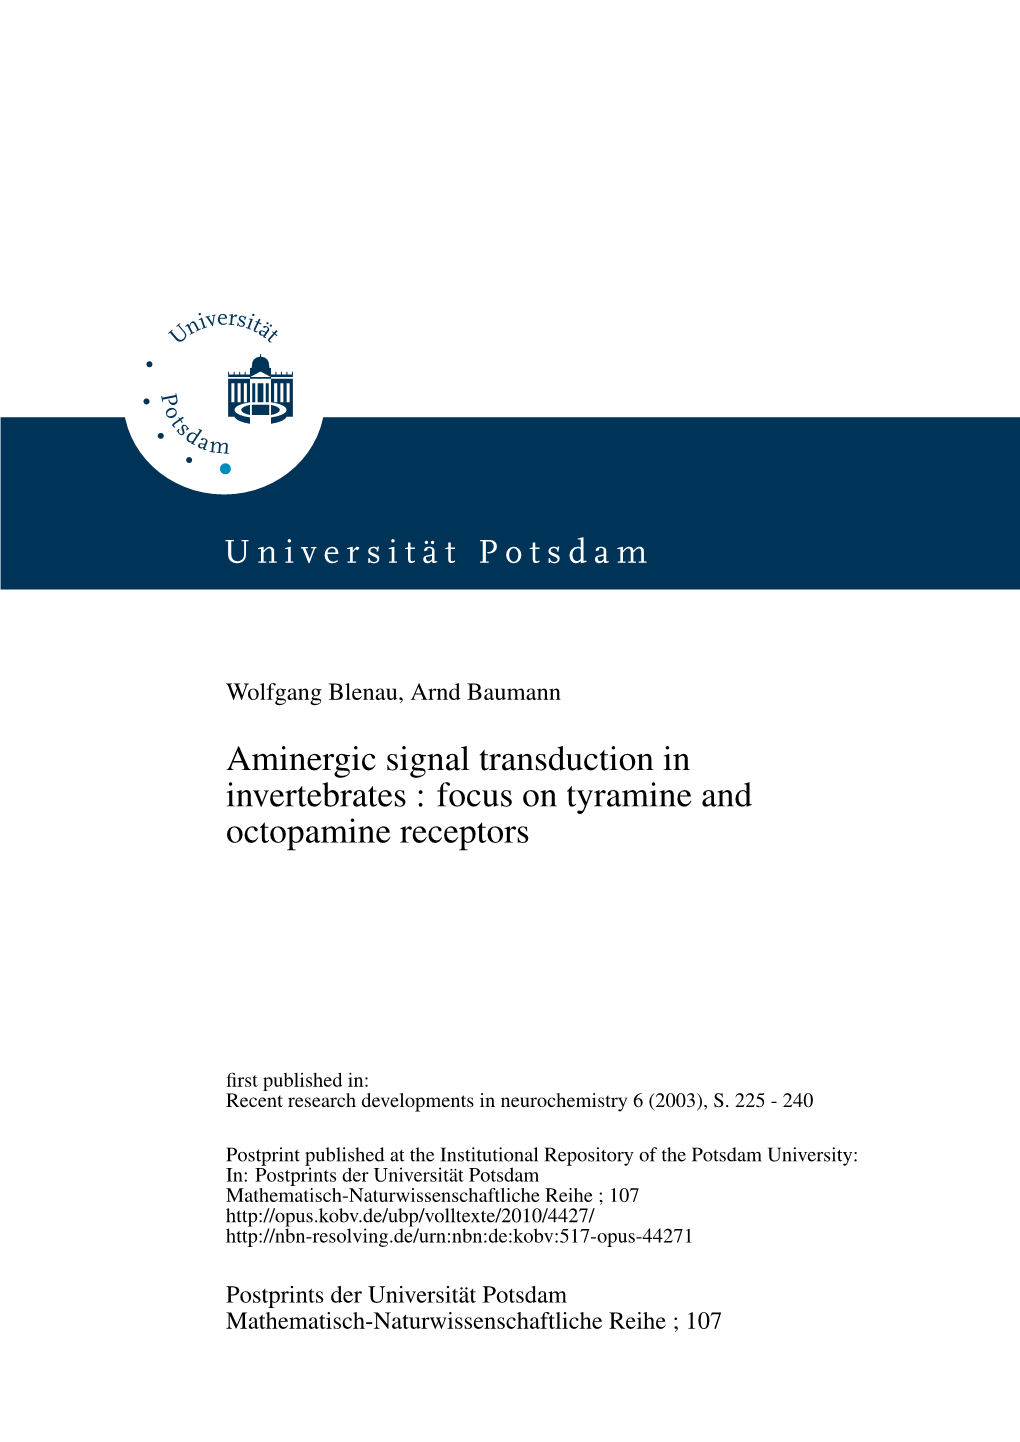 Aminergic Signal Transduction in Invertebrates : Focus on Tyramine and Octopamine Receptors